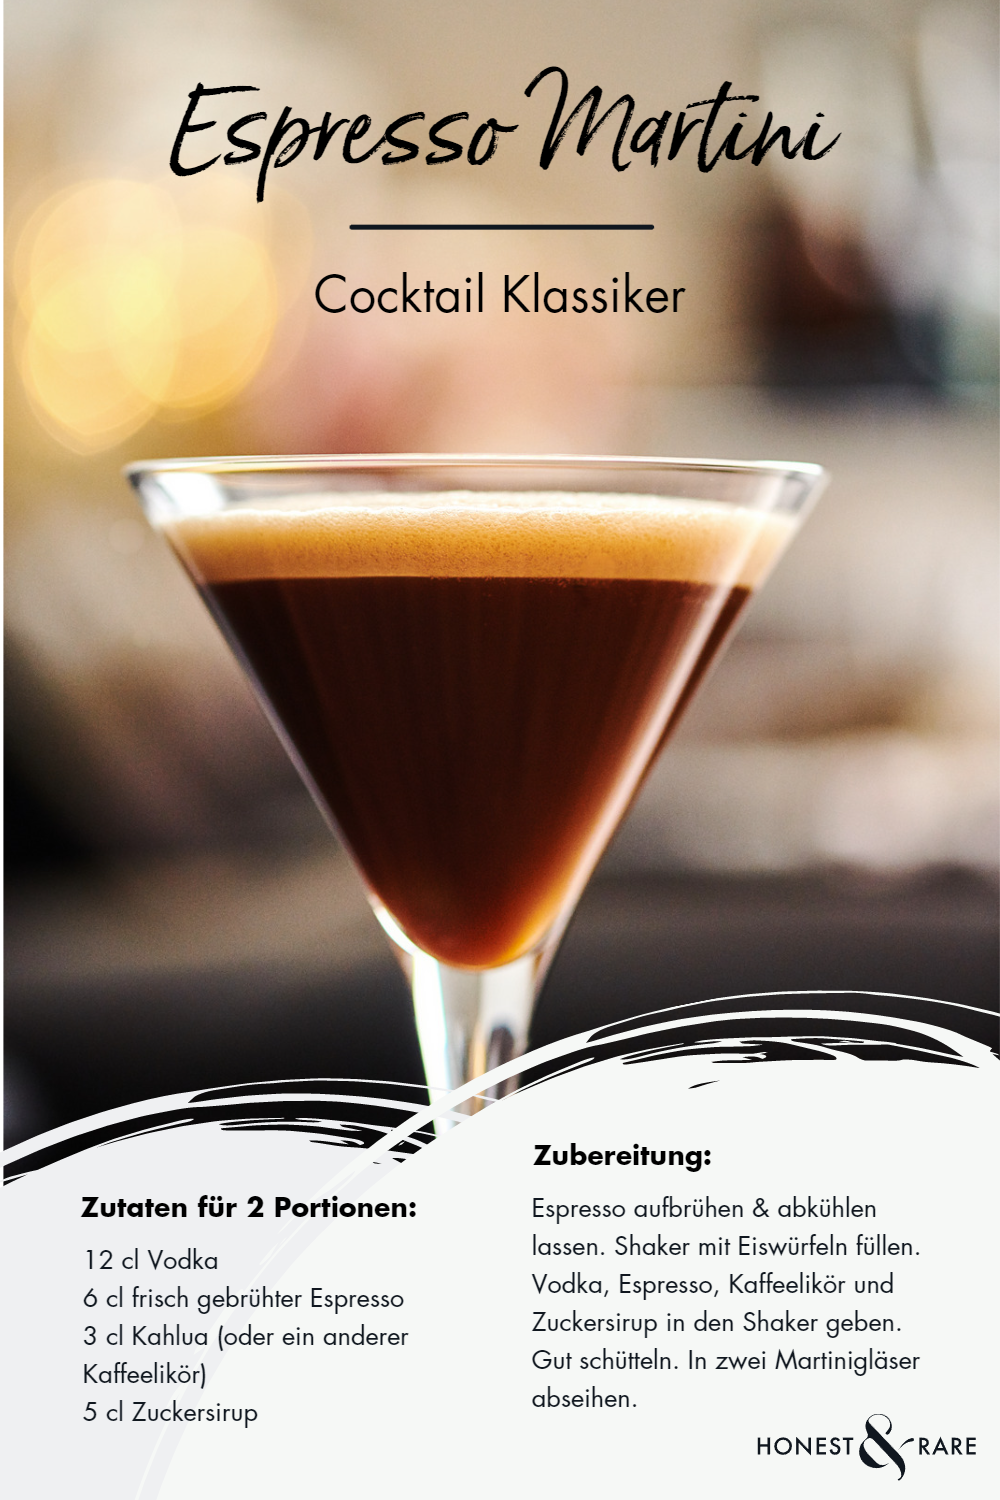 Espresso Martini - das Rezept zum Cocktail Klassiker!